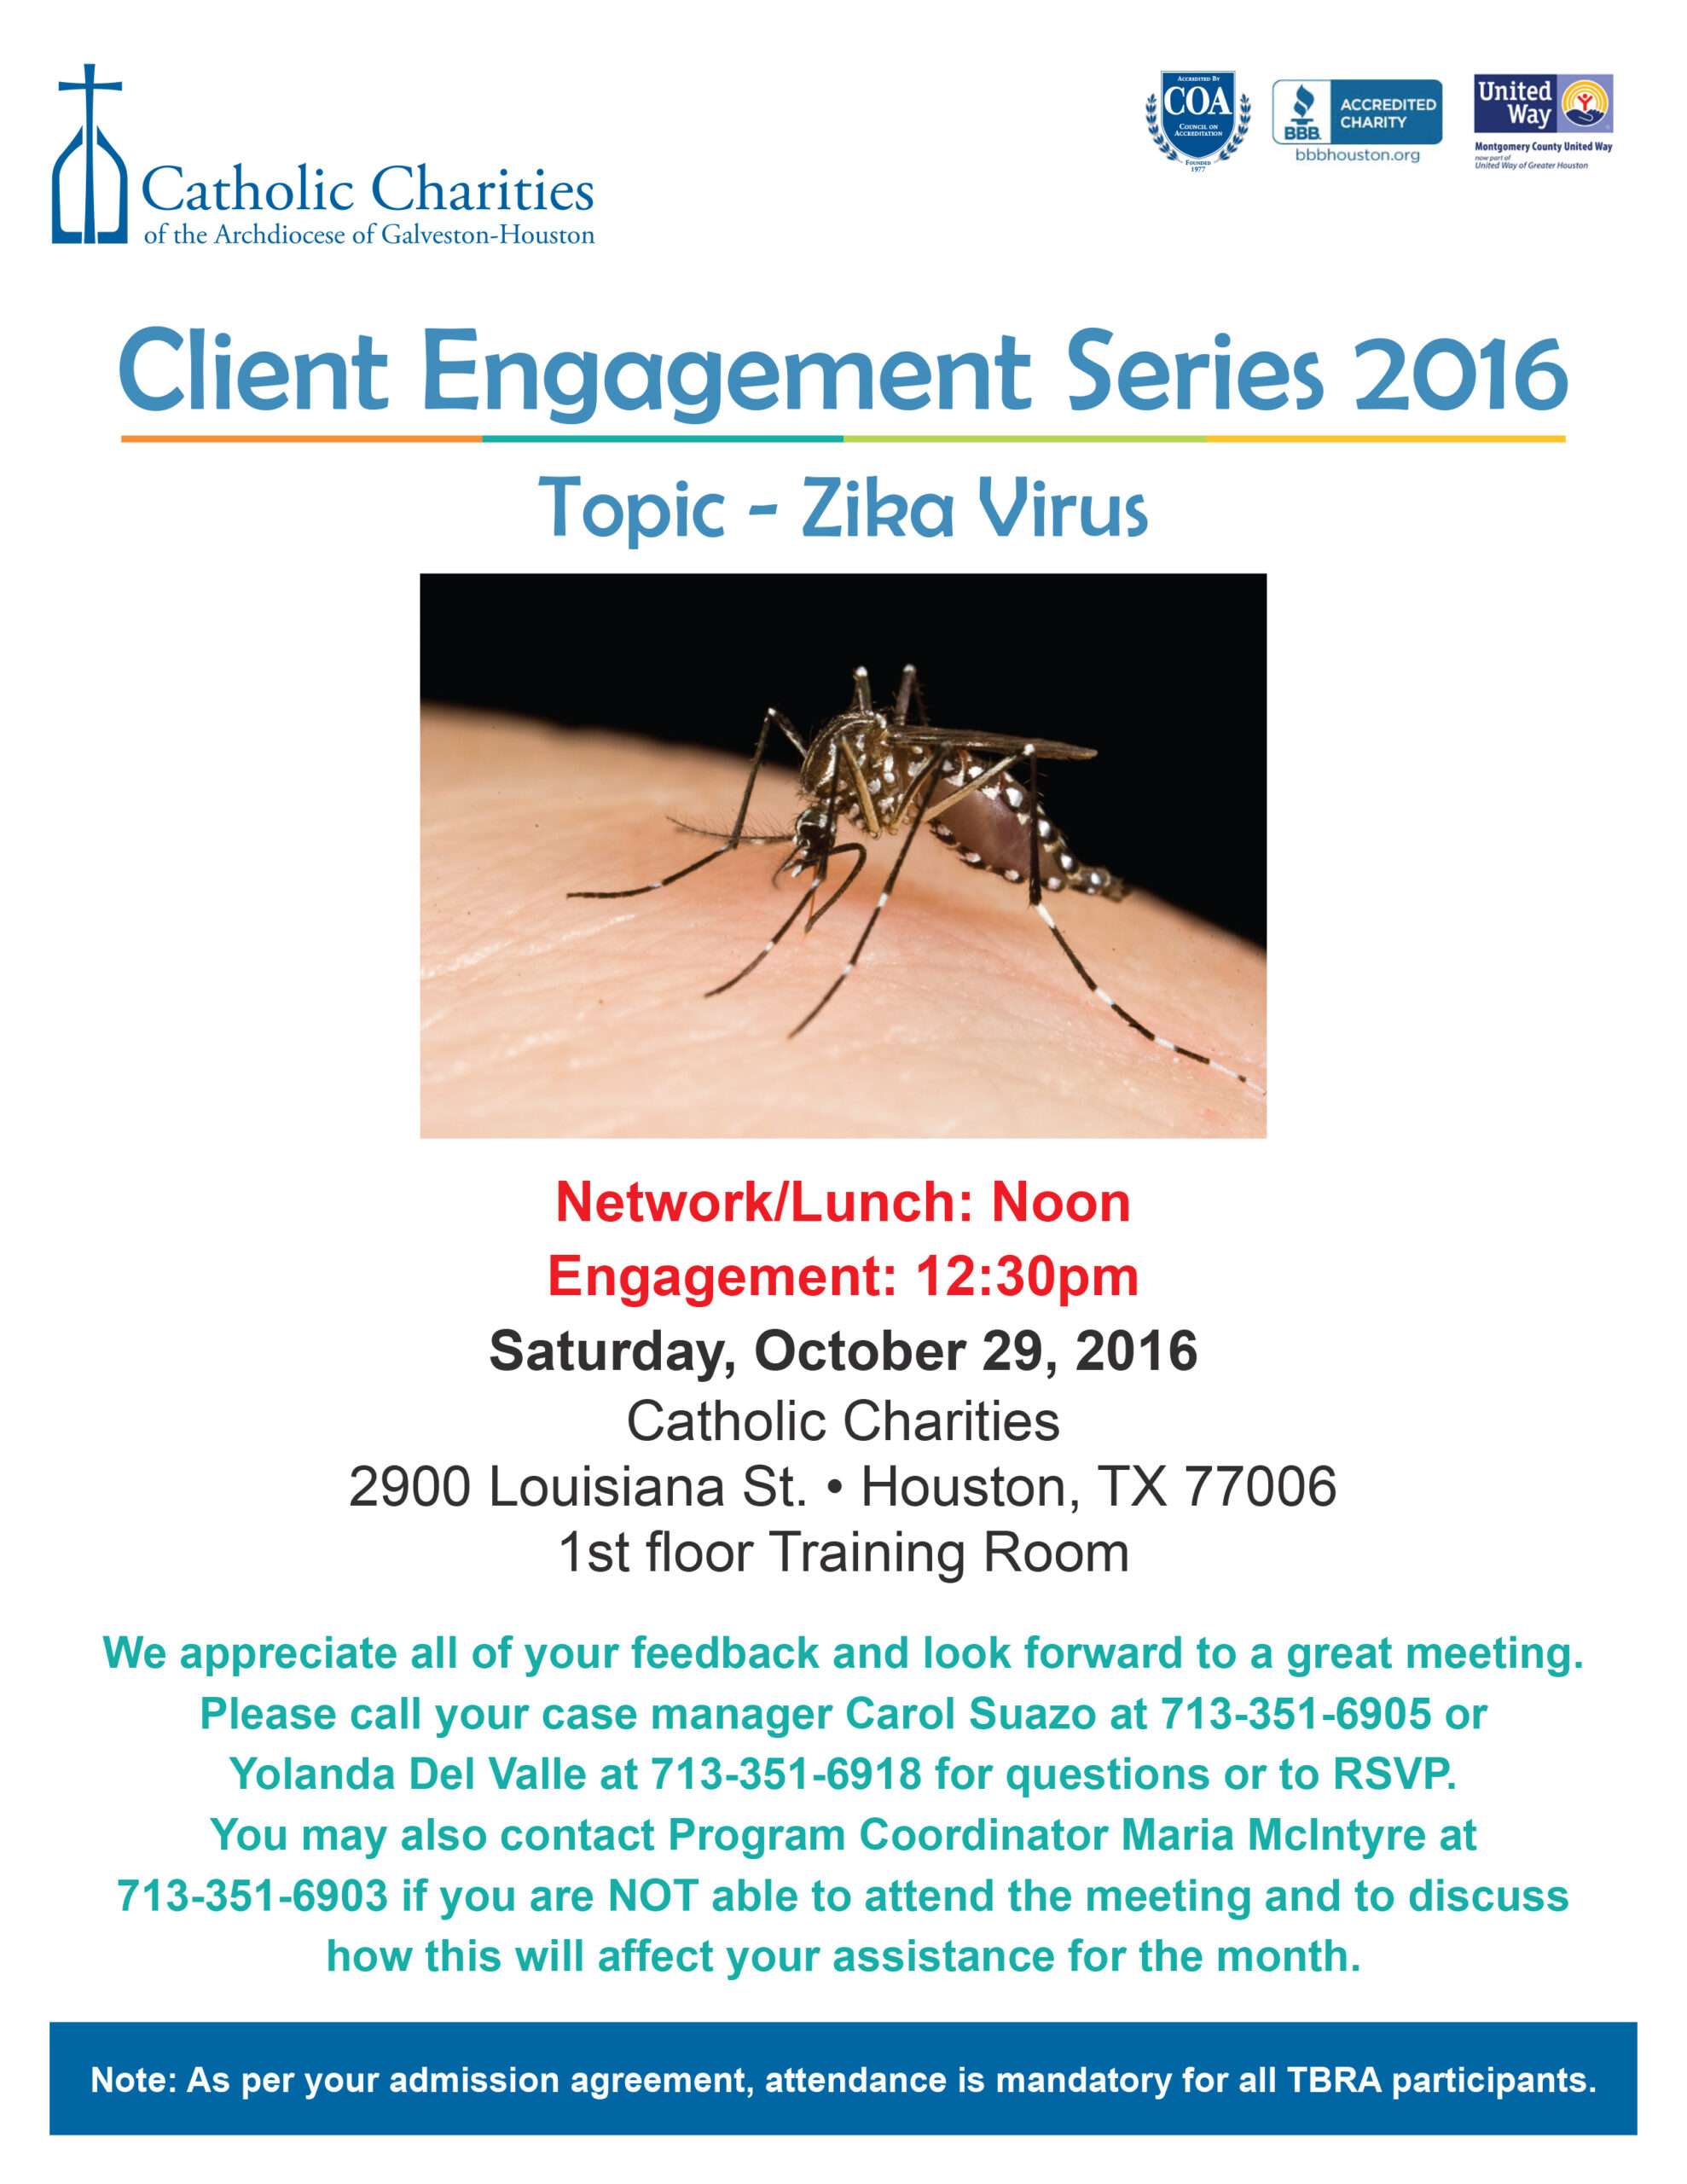 Zika Client Engagement Flyer